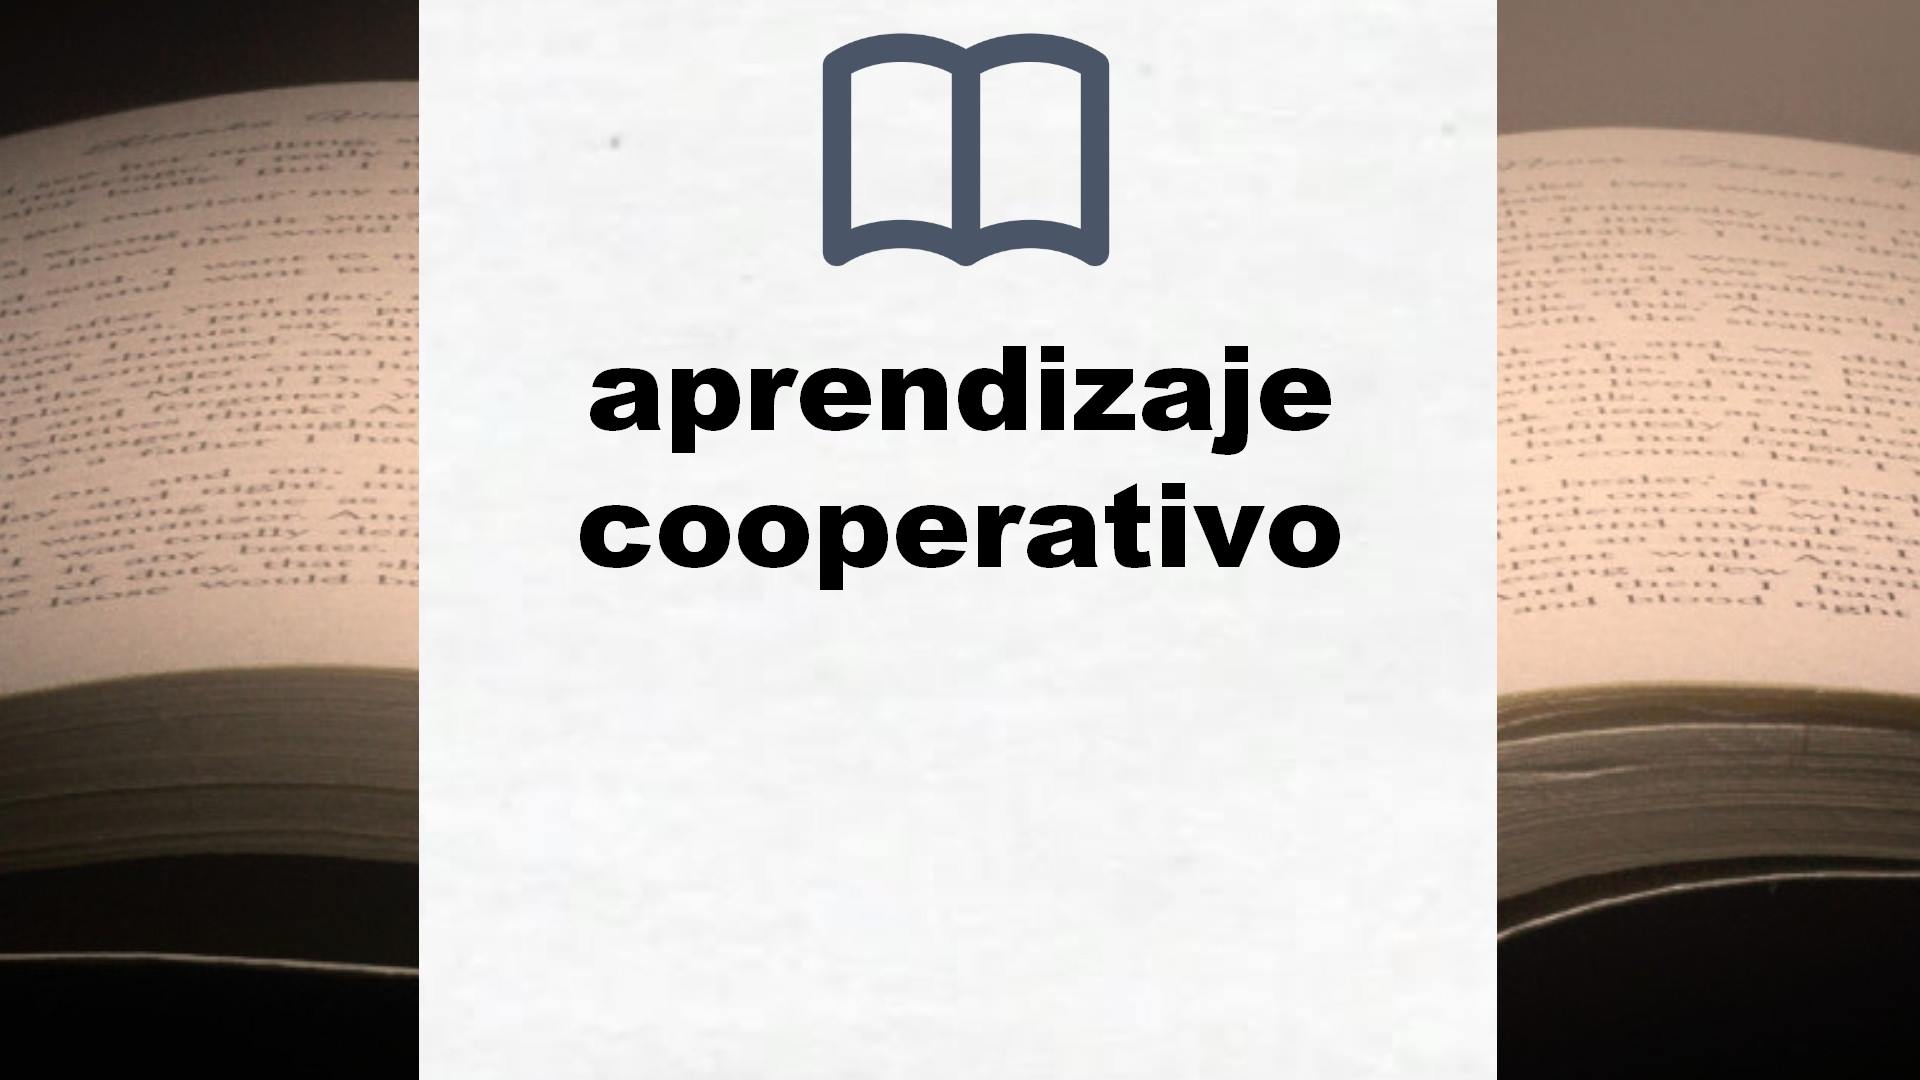 Libros sobre aprendizaje cooperativo